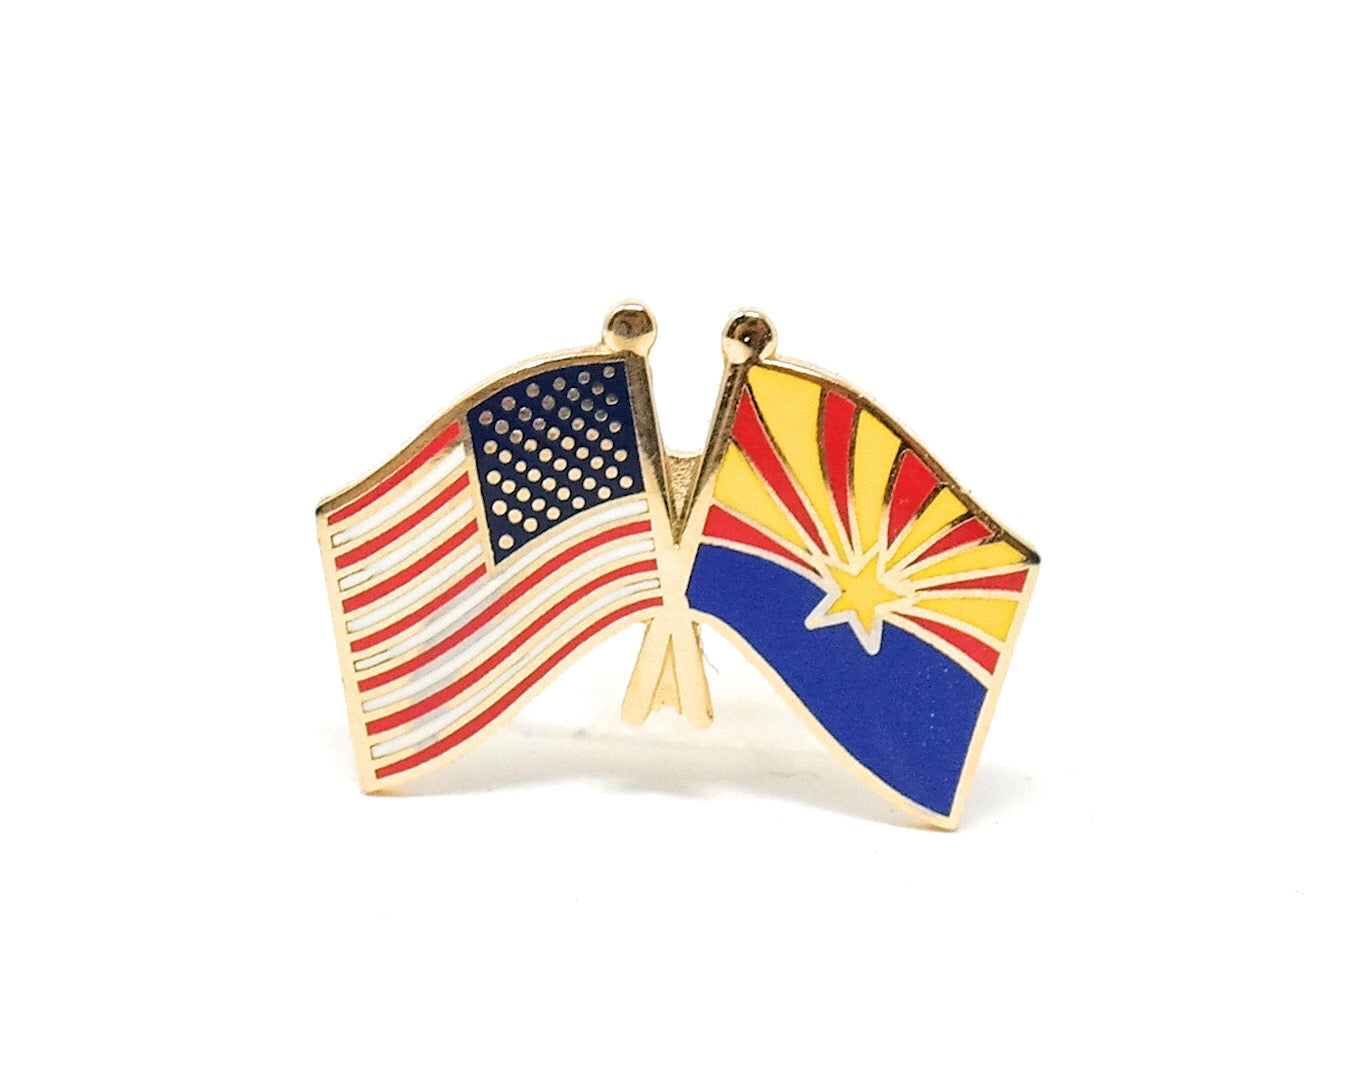 Arizona State & USA Friendship Flags Lapel Pin